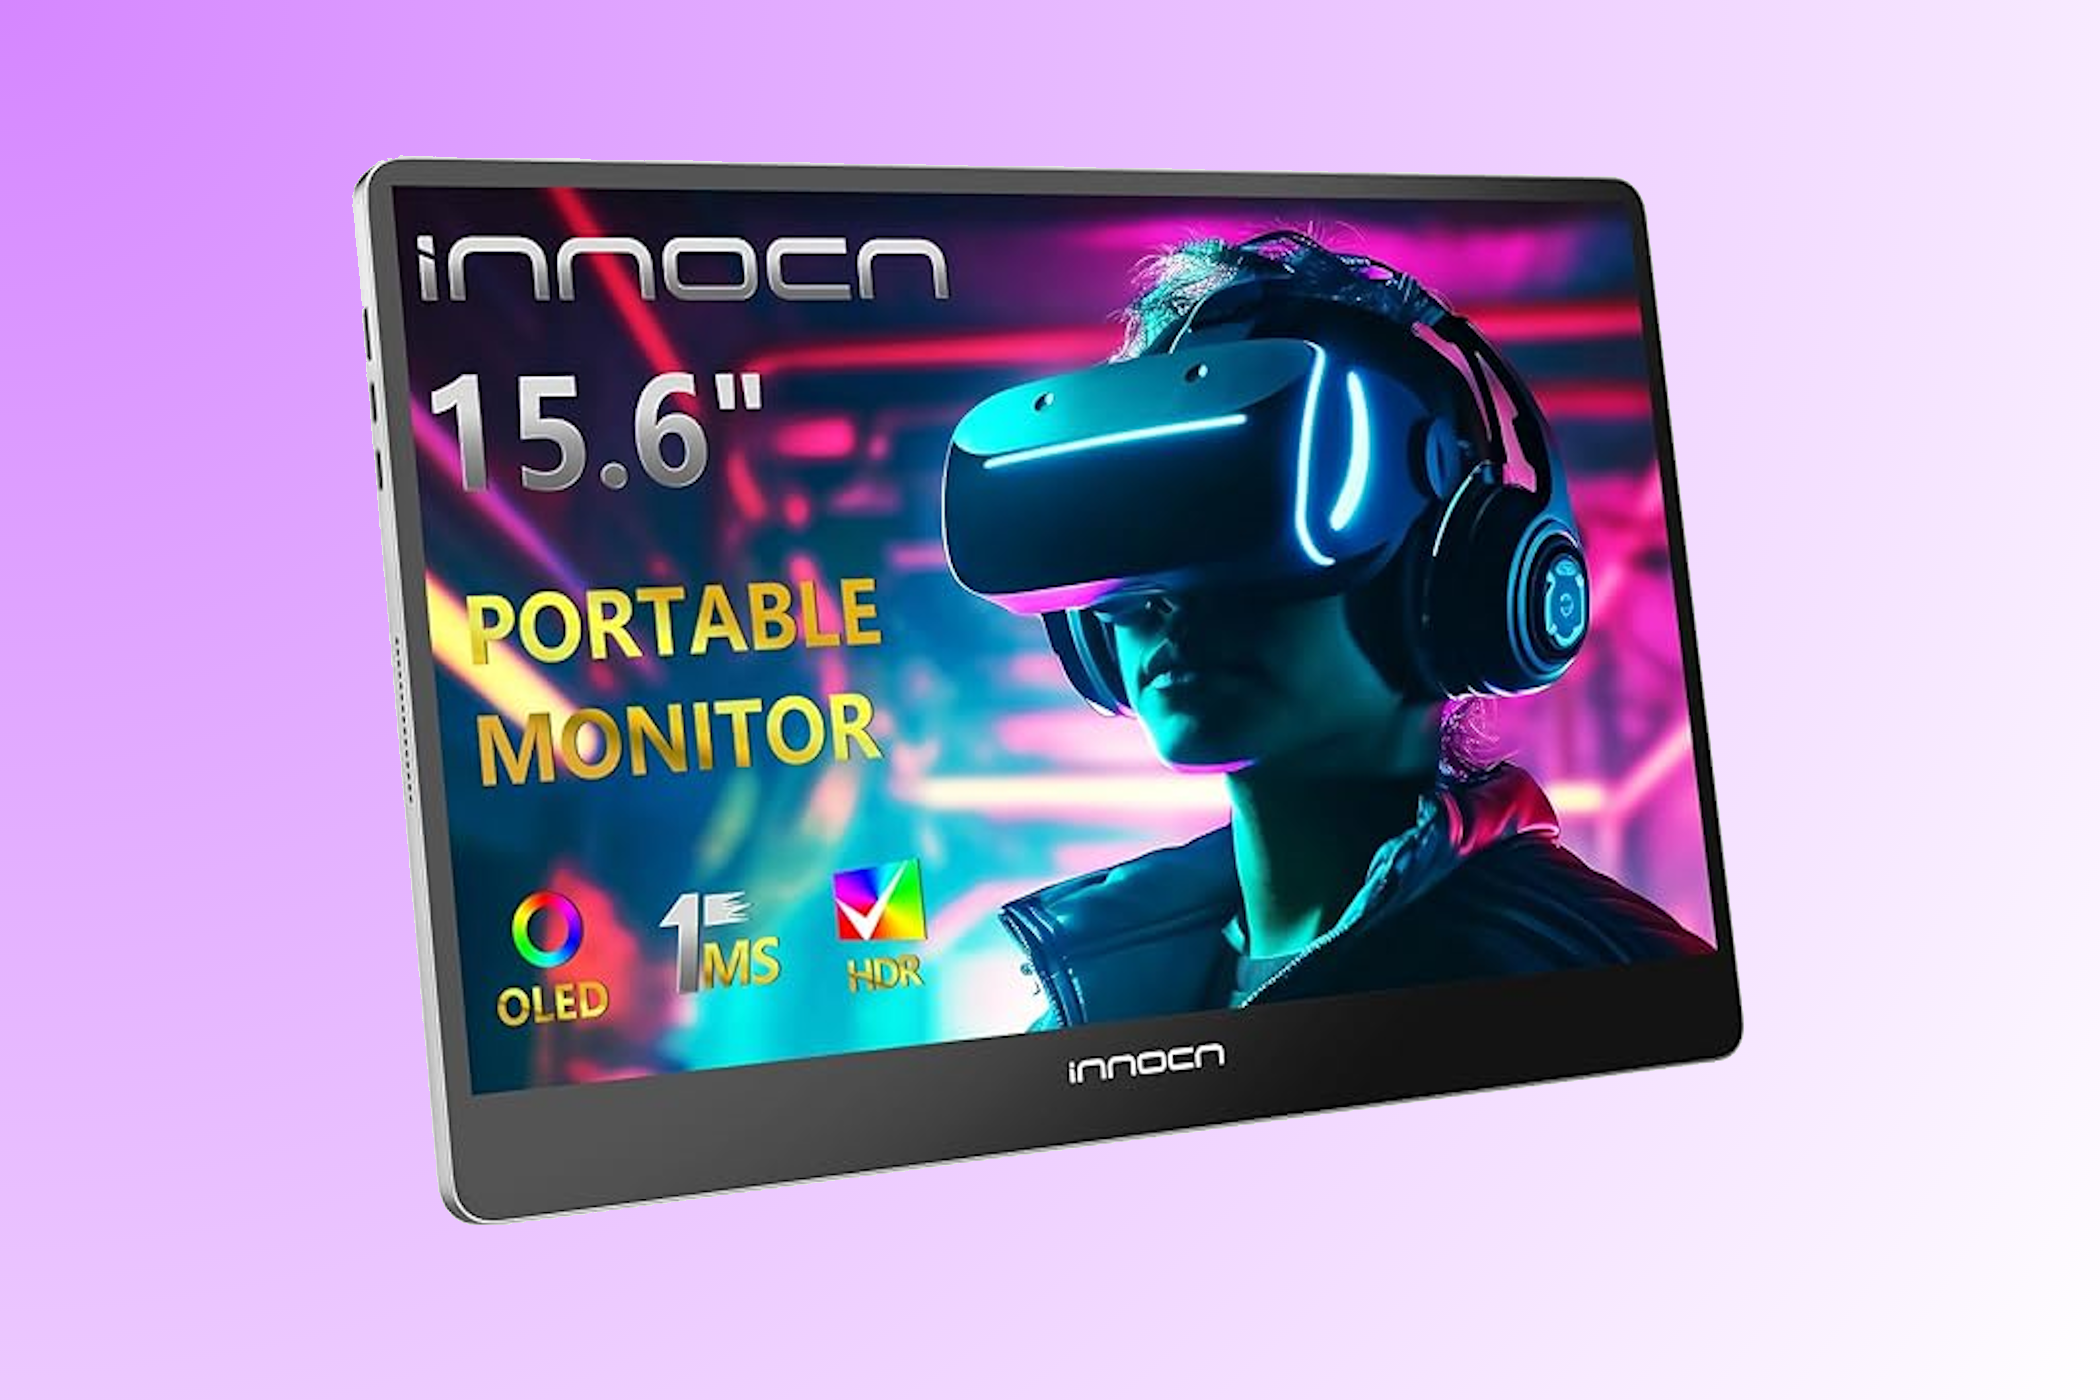 INNOCN Portable Monitor 15.6 inch OLED